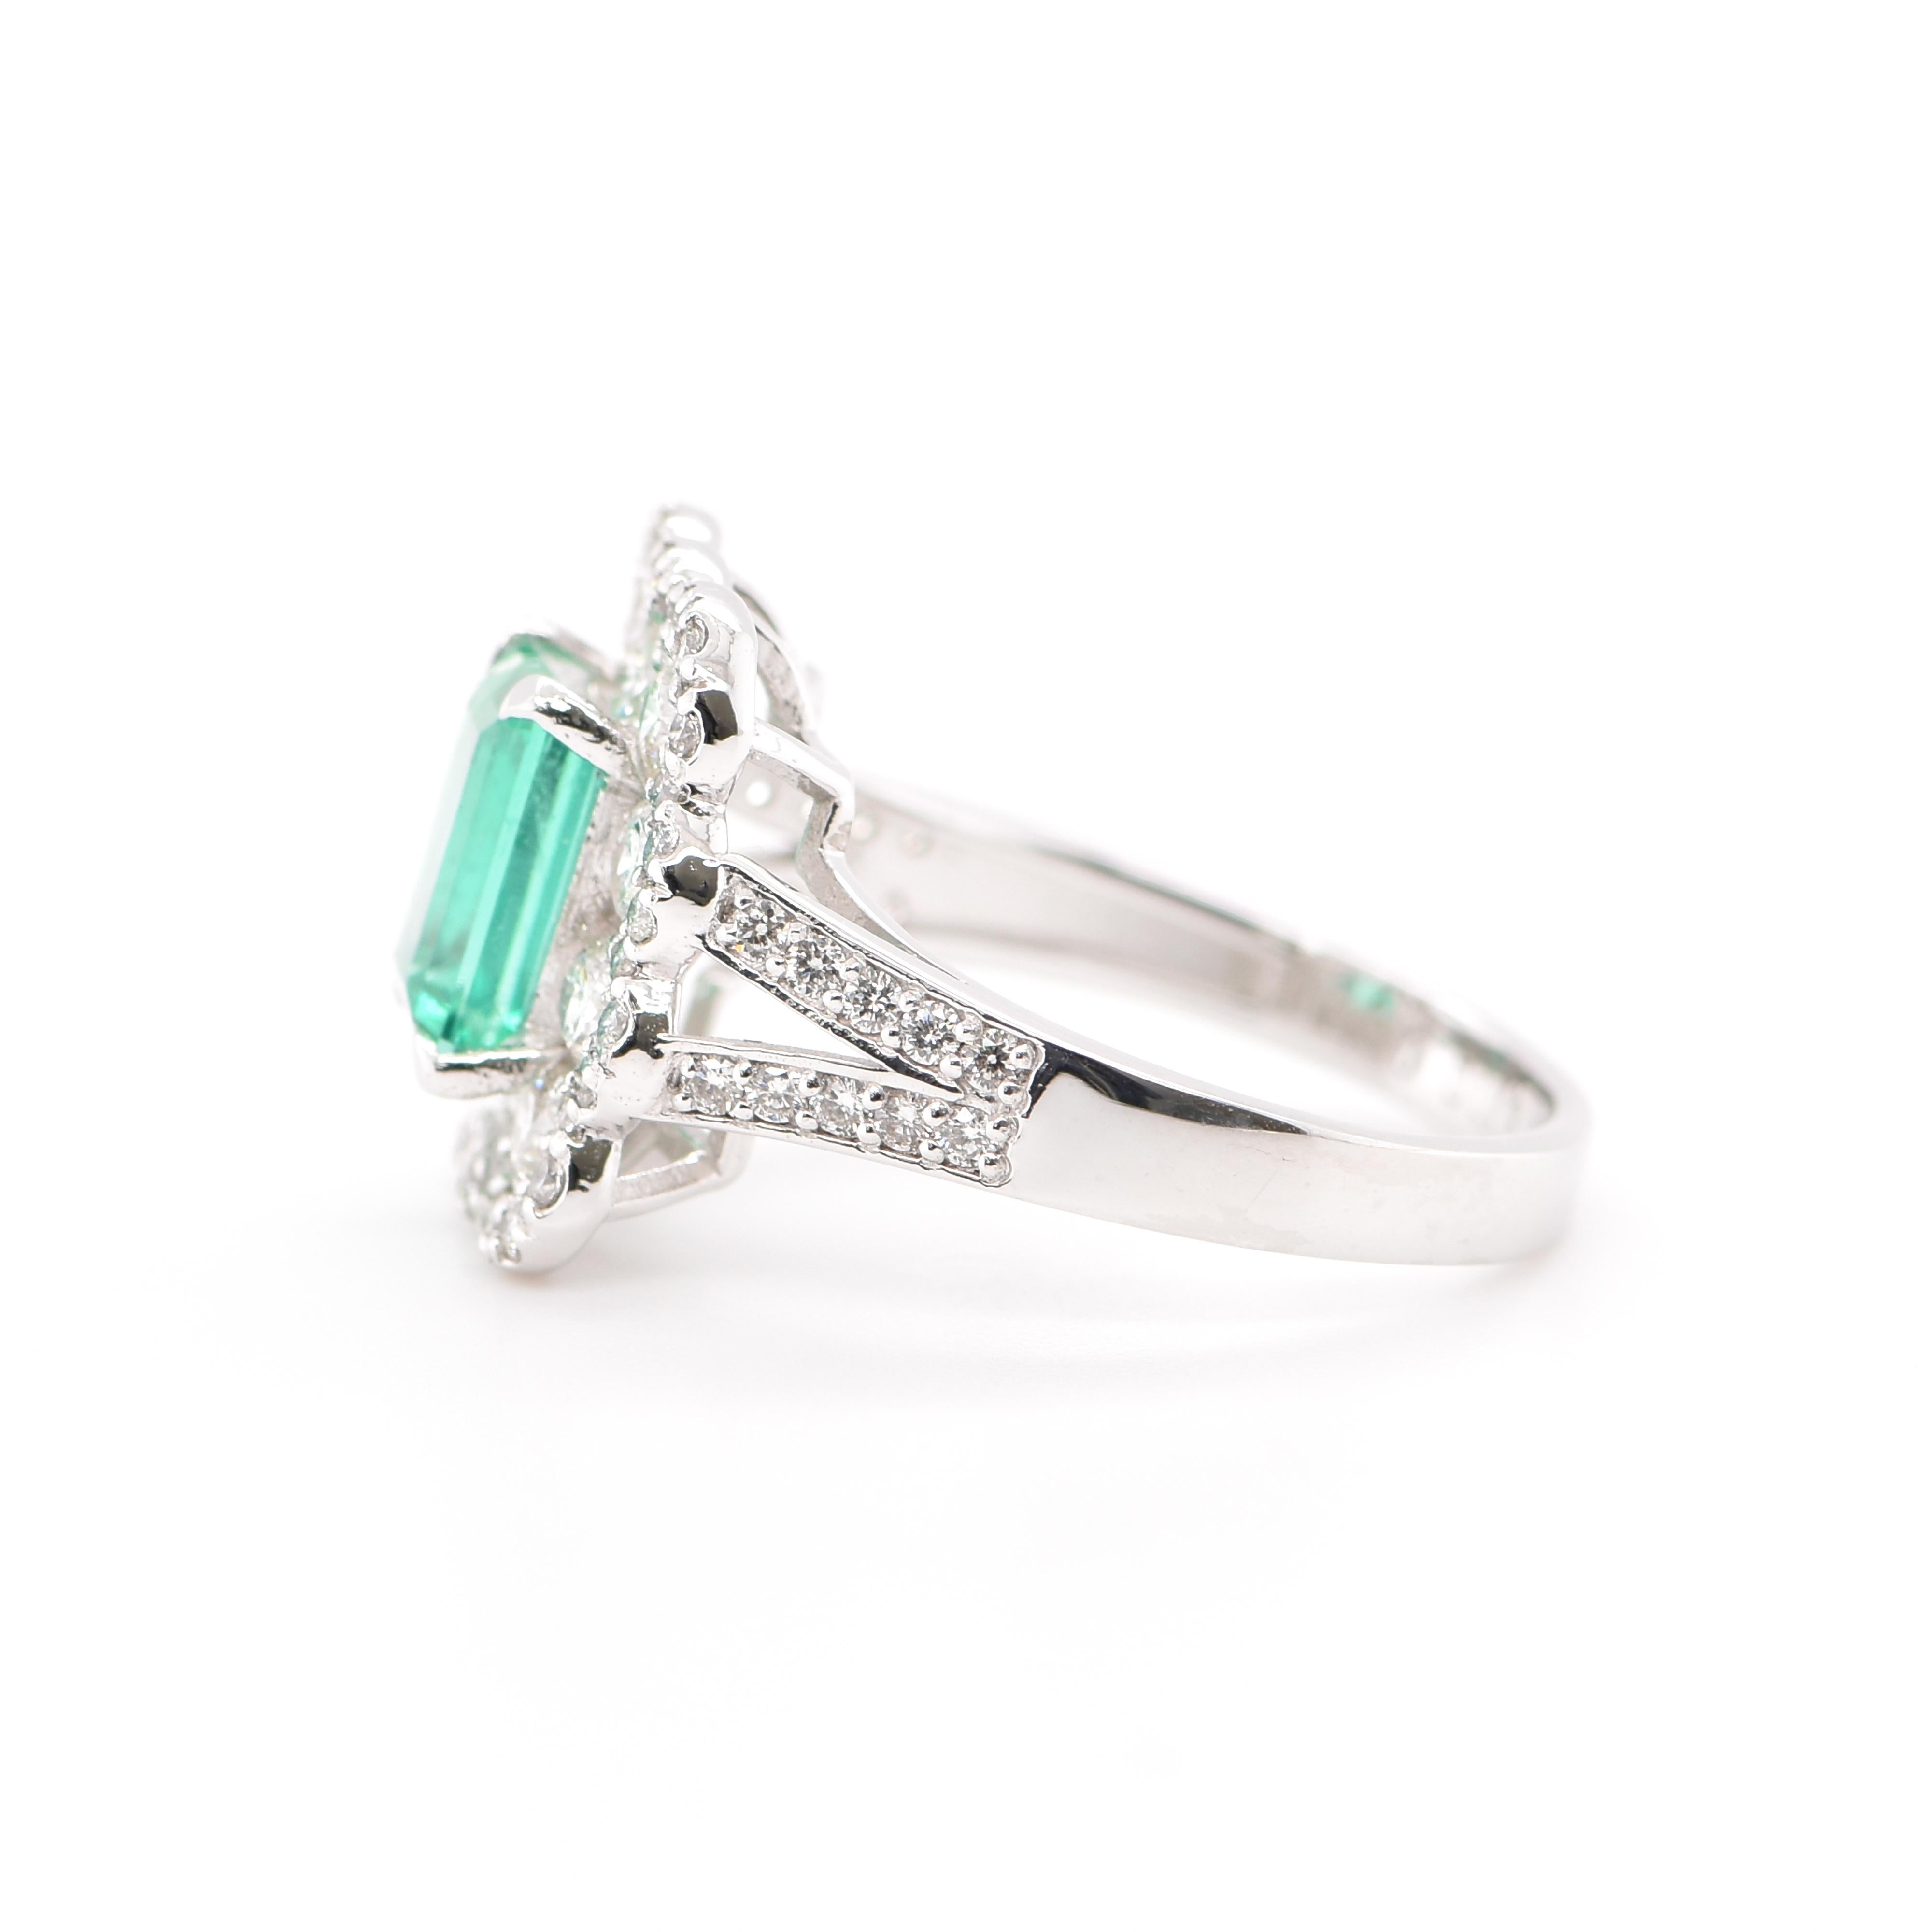 Emerald Cut GIA Certified 1.23 Carat Natural Colombian Emerald Ring Set in Platinum